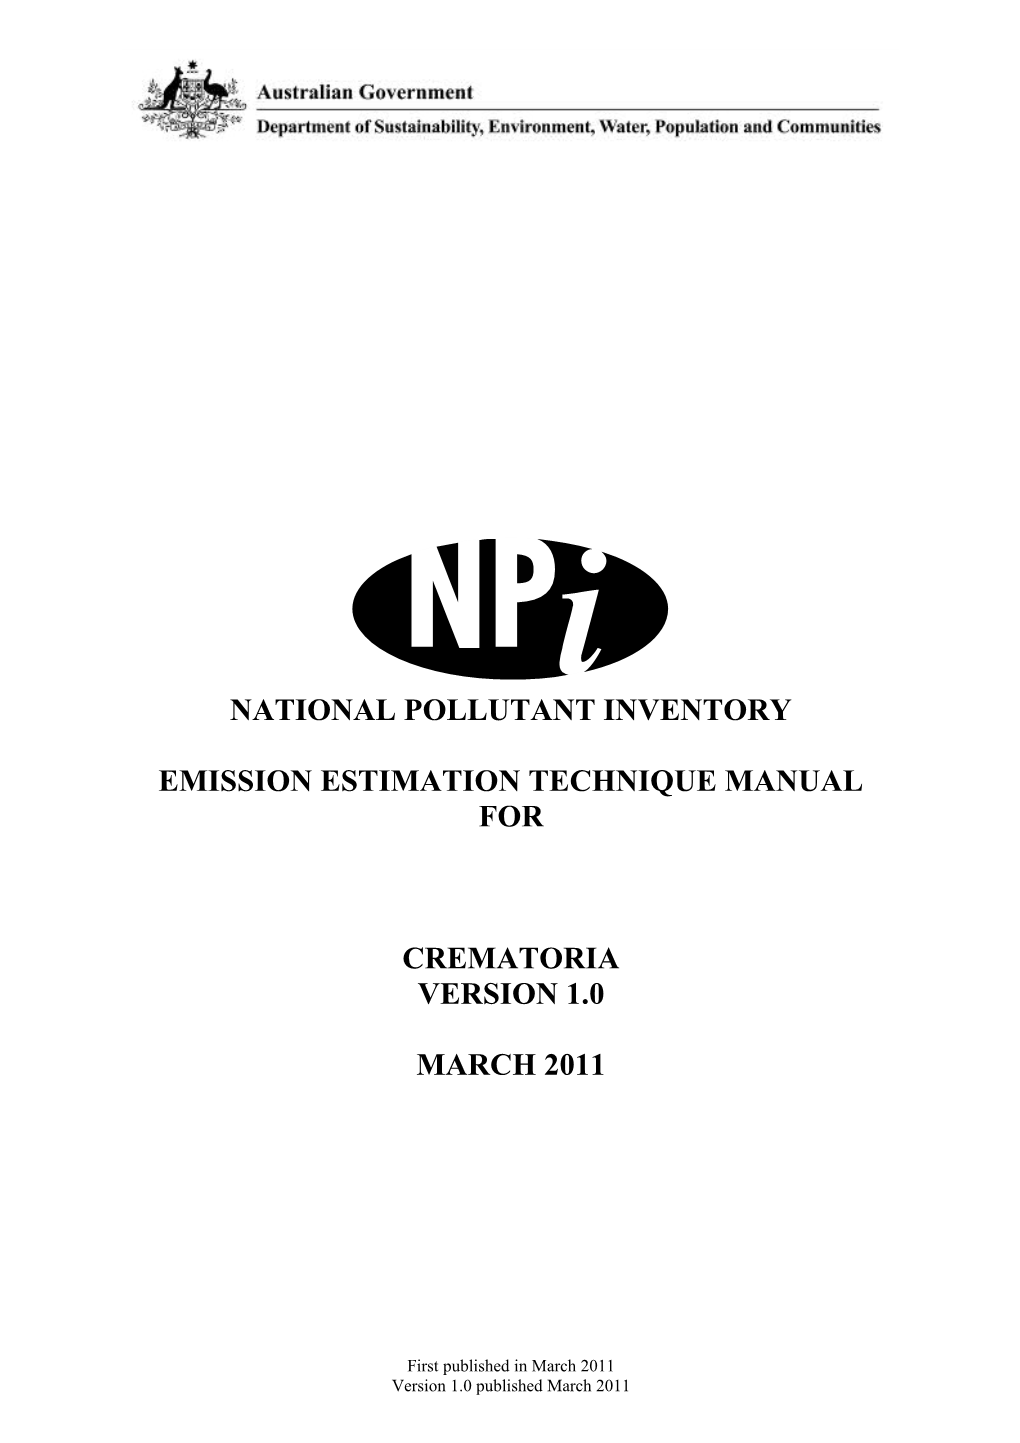 National Pollutant Inventory Emission Estimation Technique Manual for Crematoria